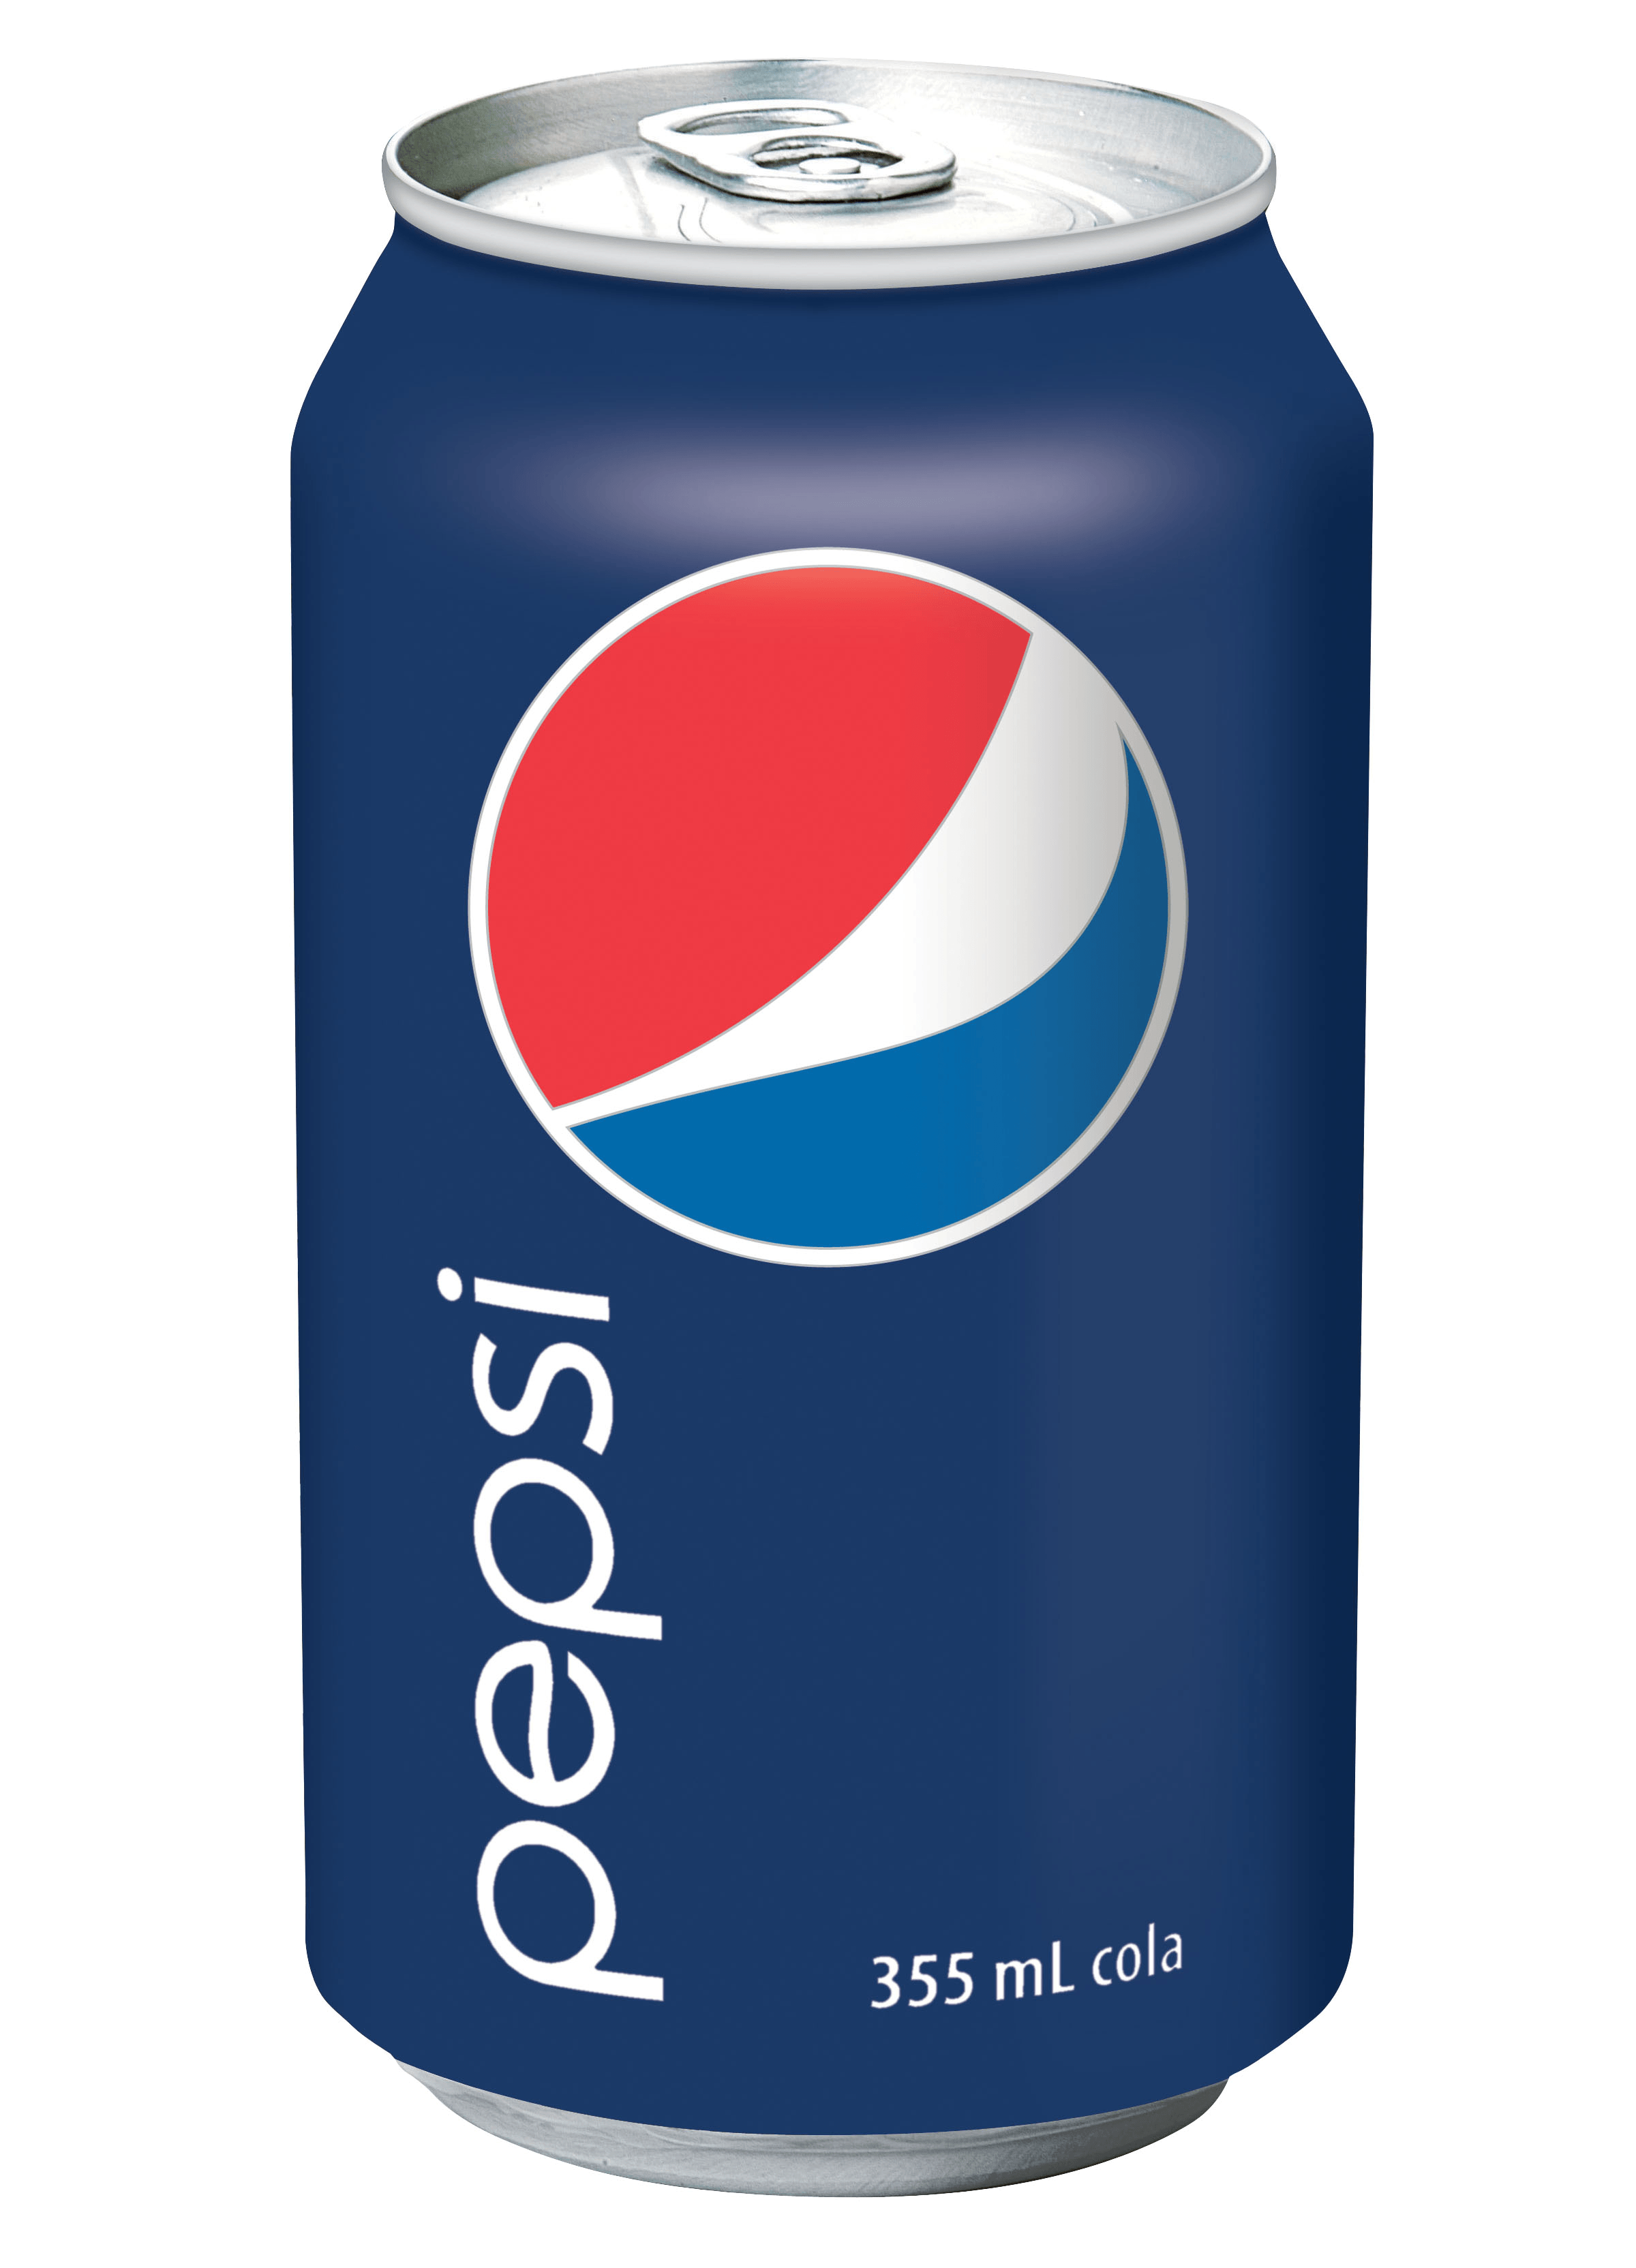 Pepsi Bottle Logo - Free Pepsi Cliparts, Download Free Clip Art, Free Clip Art on ...